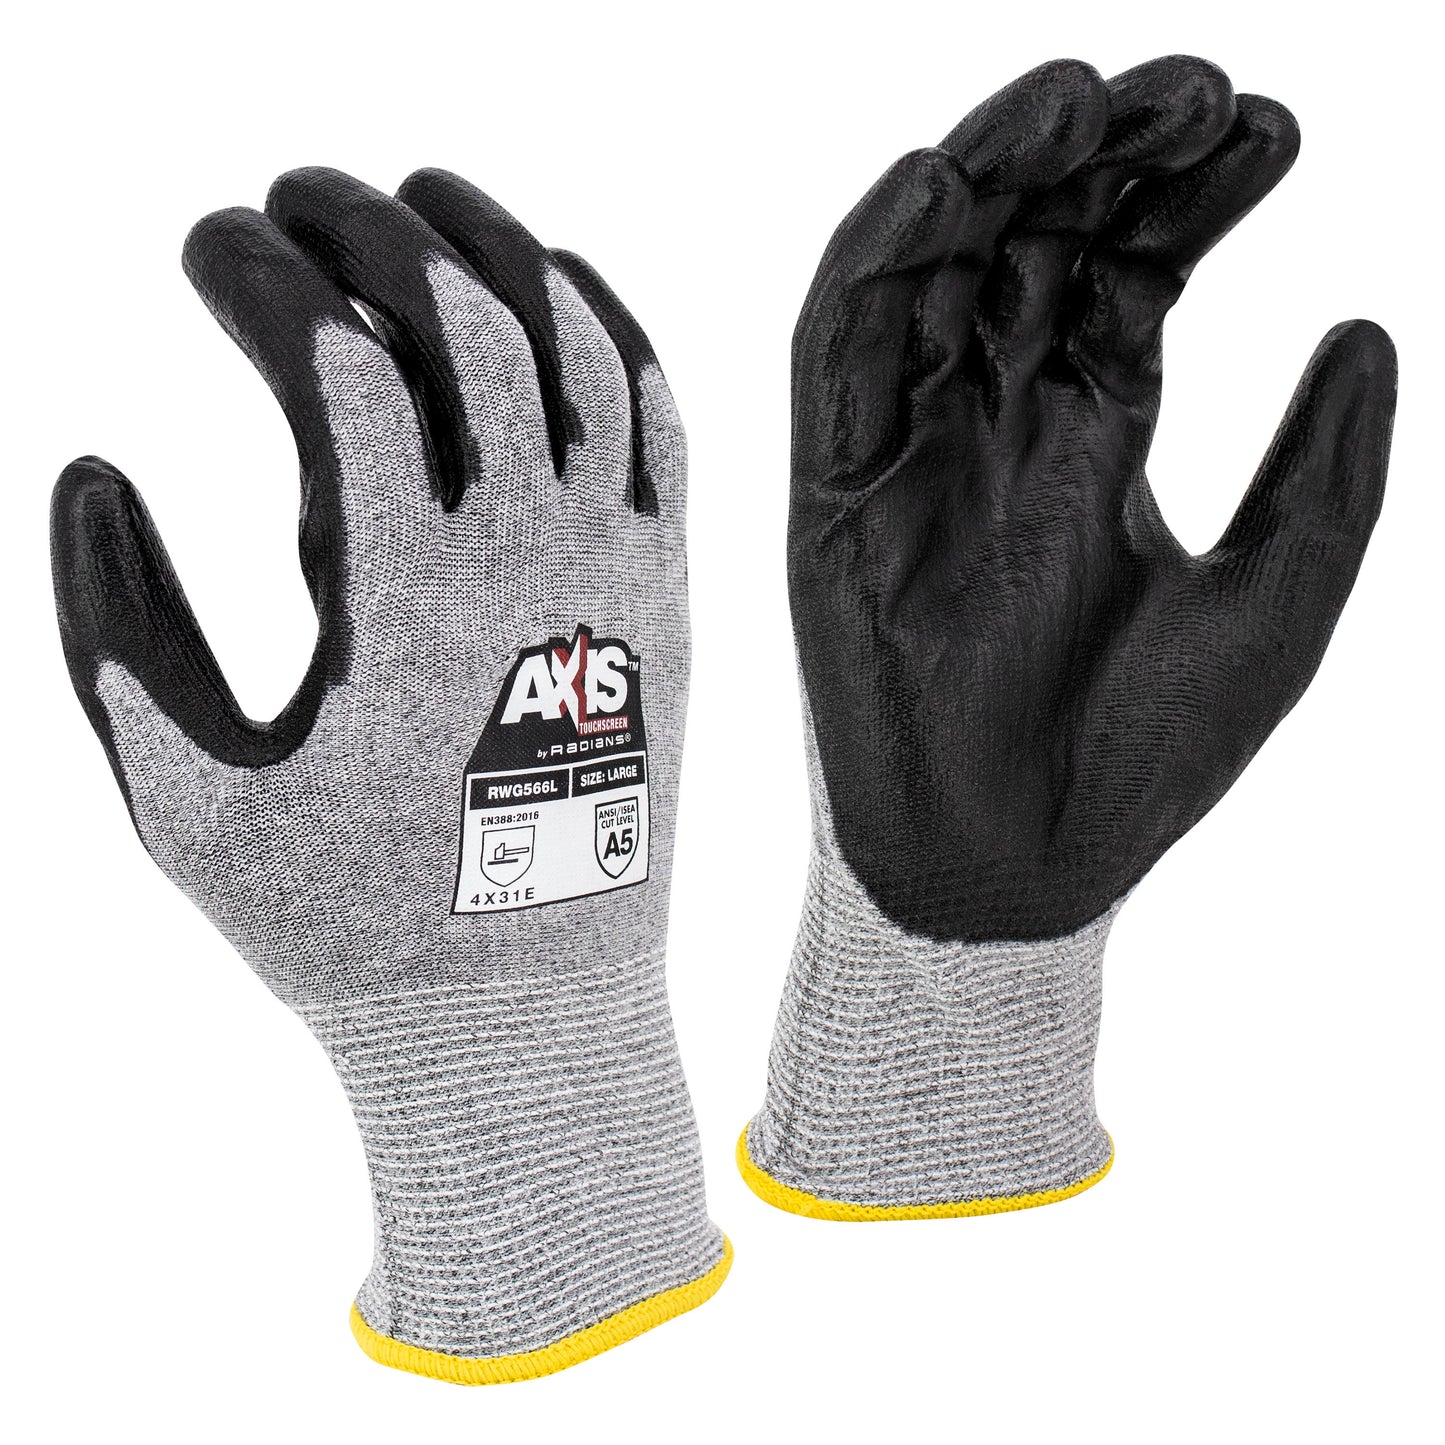 Radians RWG566 AXIS Cut Protection Level A5 Touchscreen Work Glove